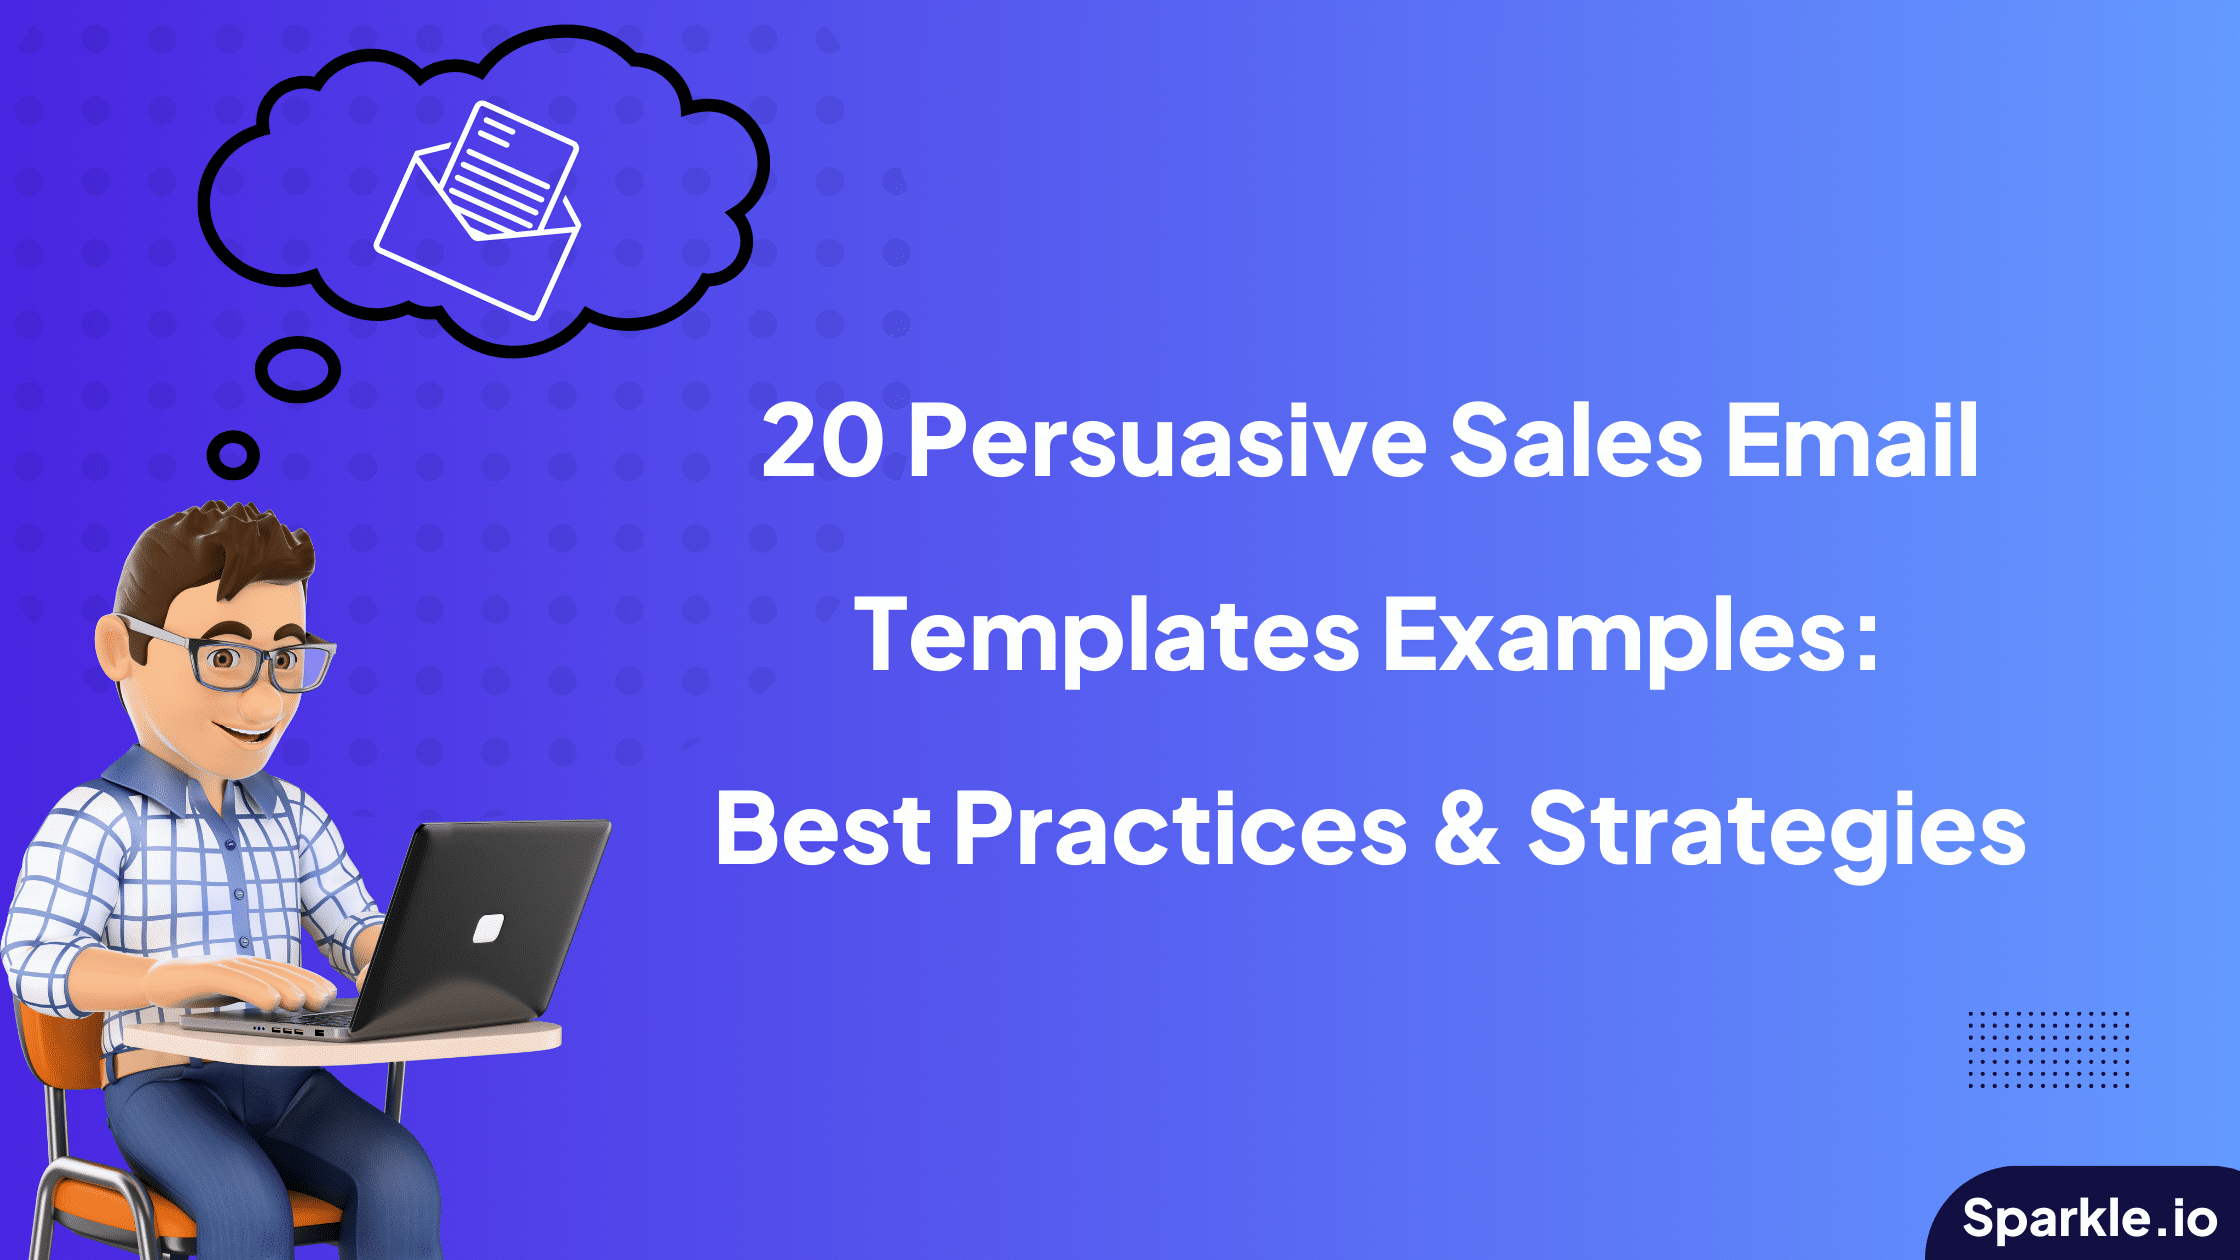 20 Persuasive Sales Email Templates Examples : Best Practices & Strategies